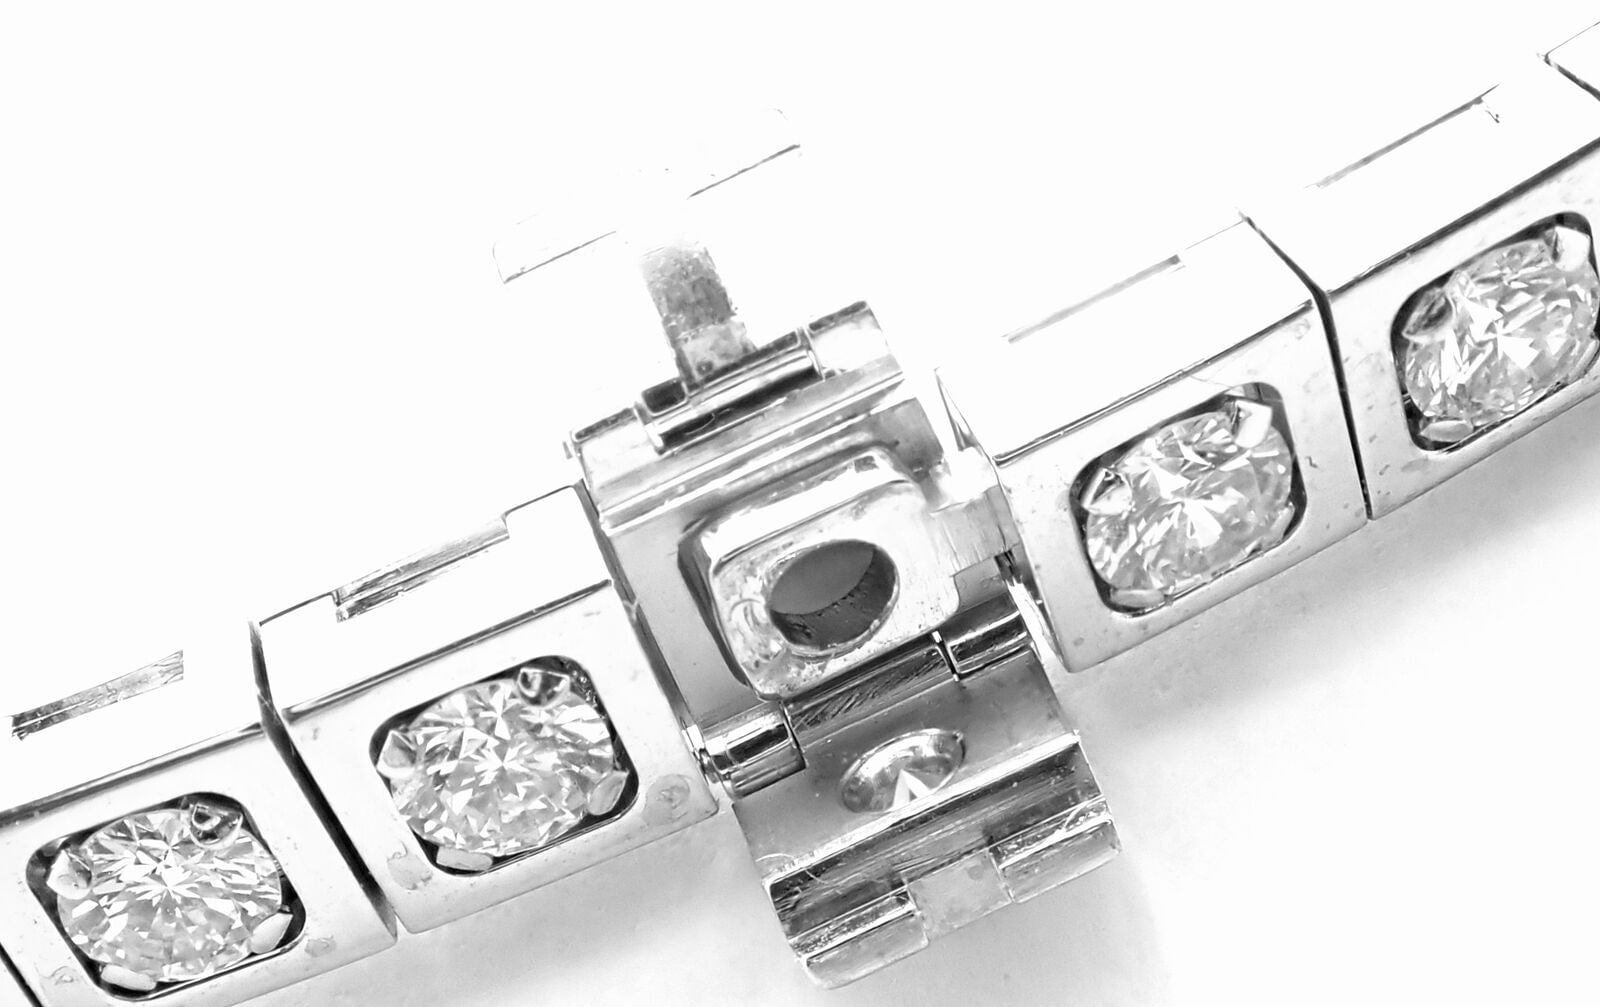 Cartier Jewelry & Watches:Fine Jewelry:Necklaces & Pendants Rare! Authentic Cartier Tectonique 18k White Gold Diamond Tennis Necklace